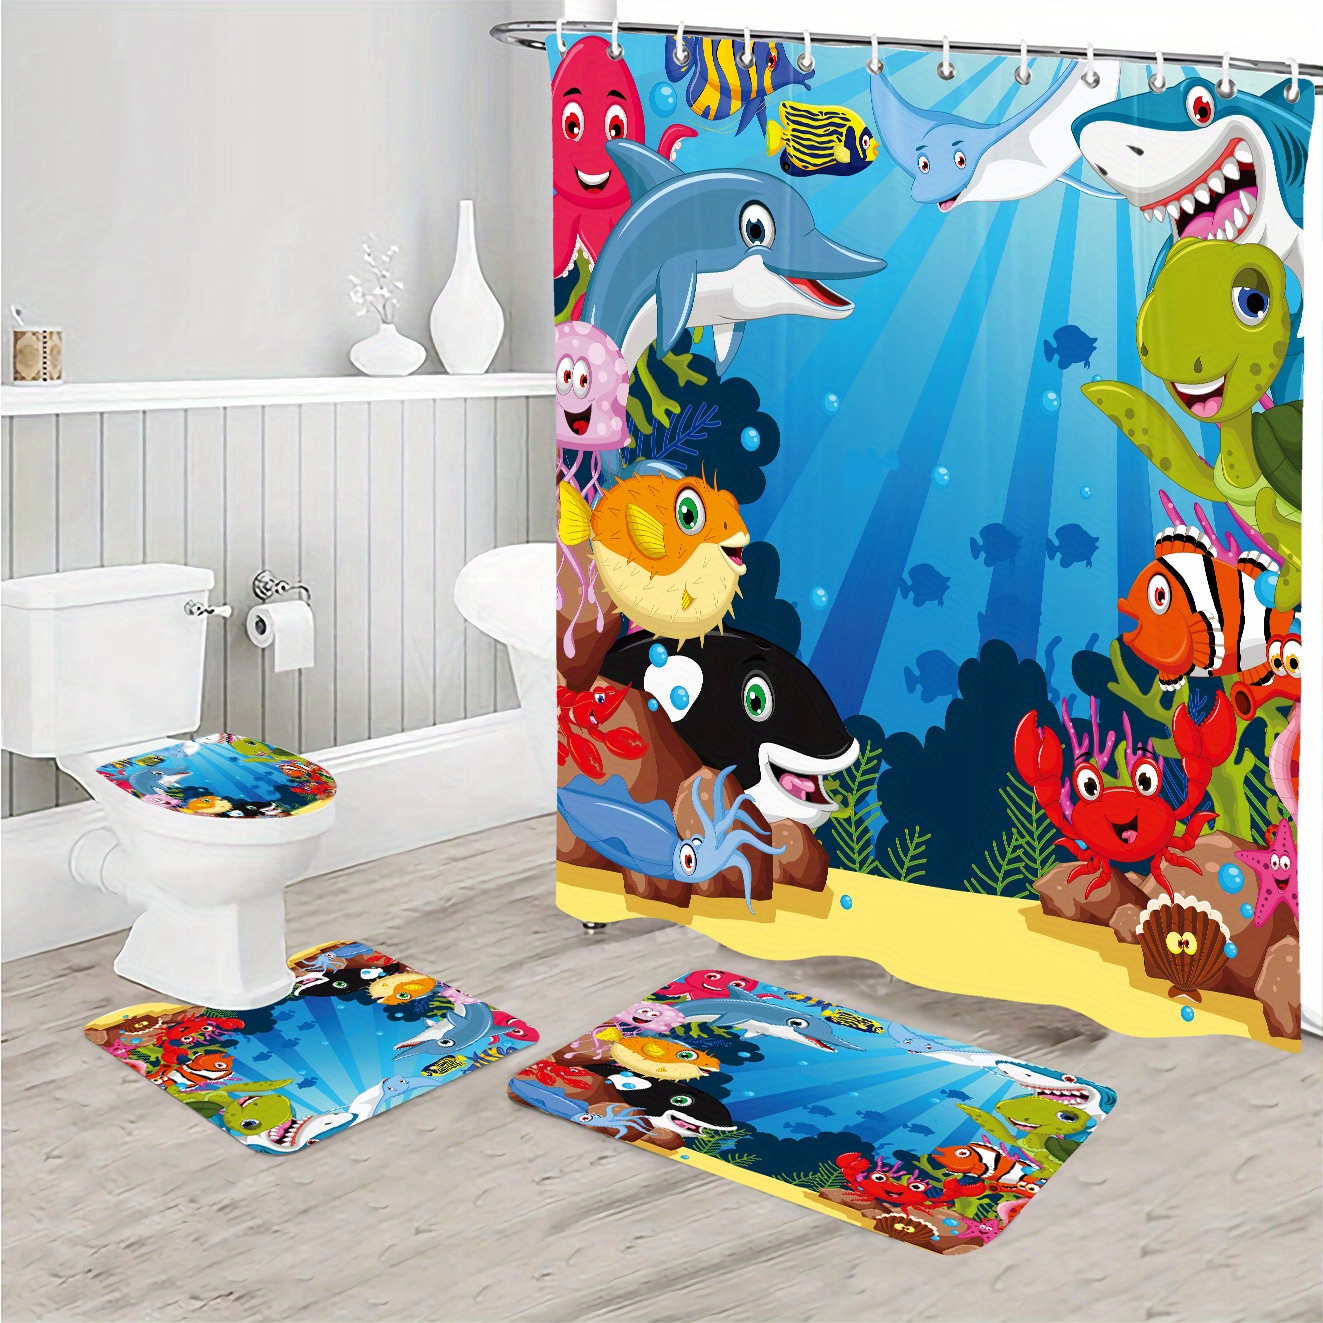 Singingin Shower Curtain Set with Bathroom Rugs and Mats Cartoon